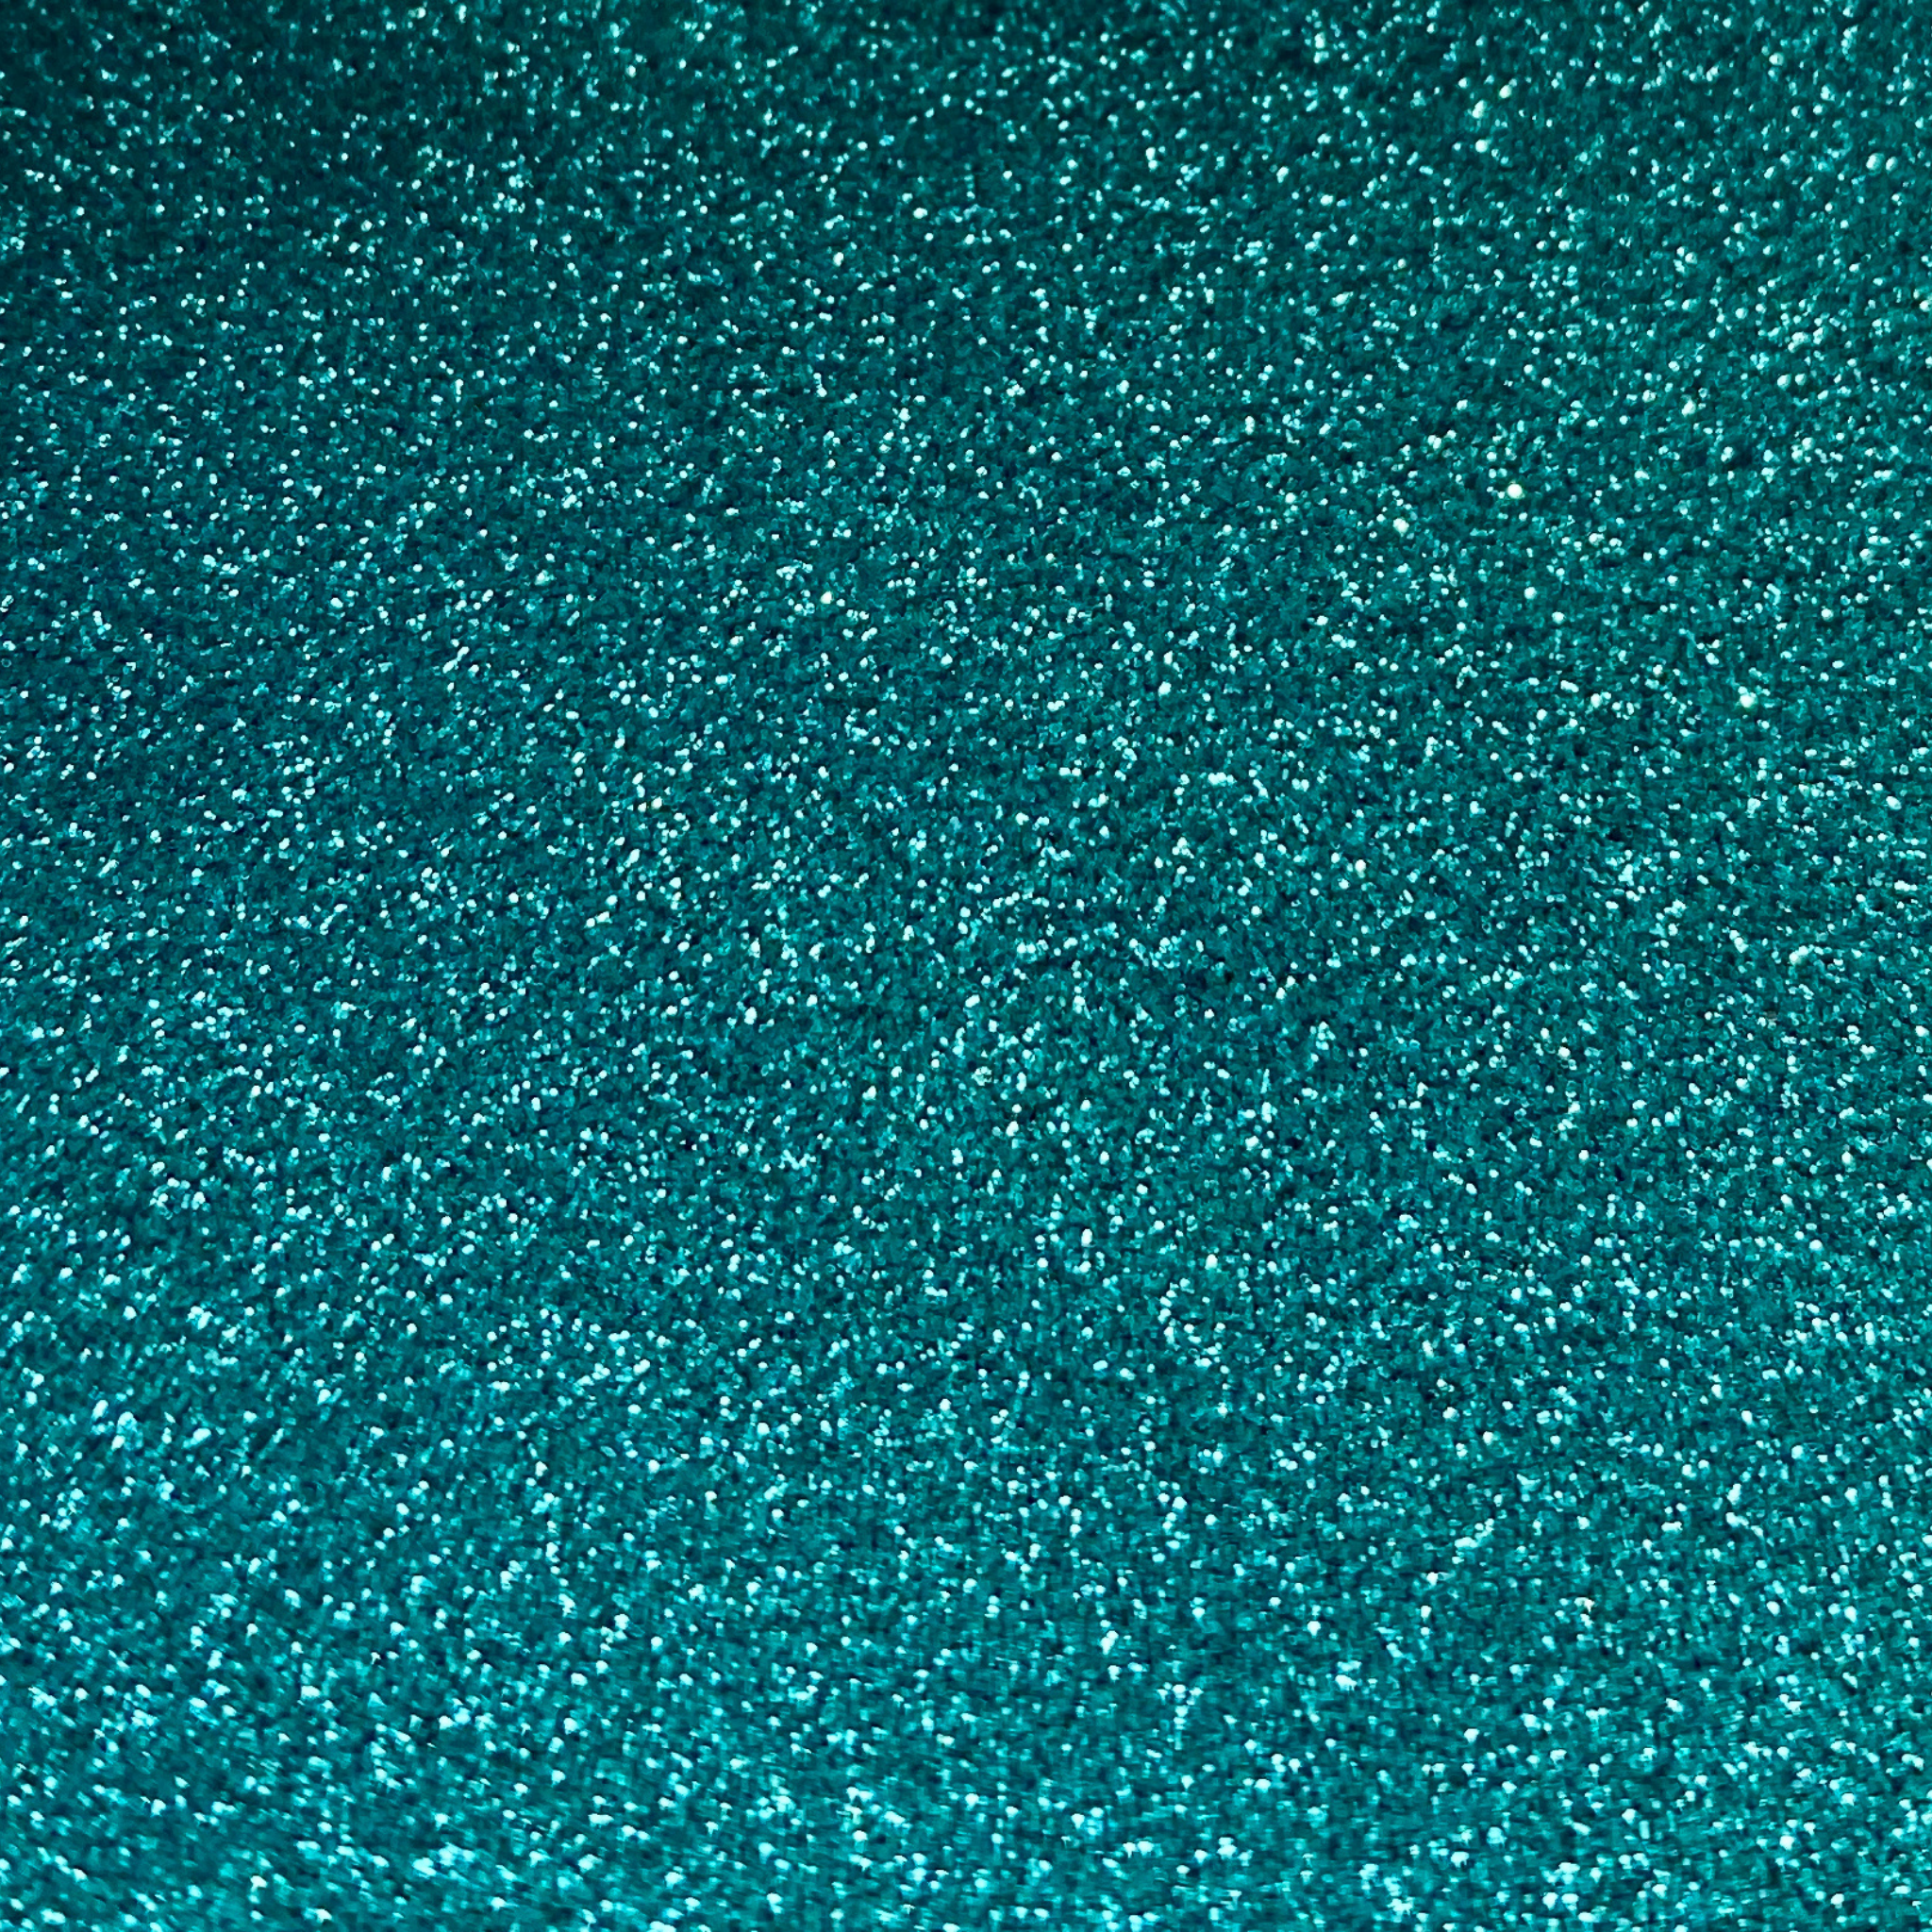 Bulk turquoise eco friendly glitter